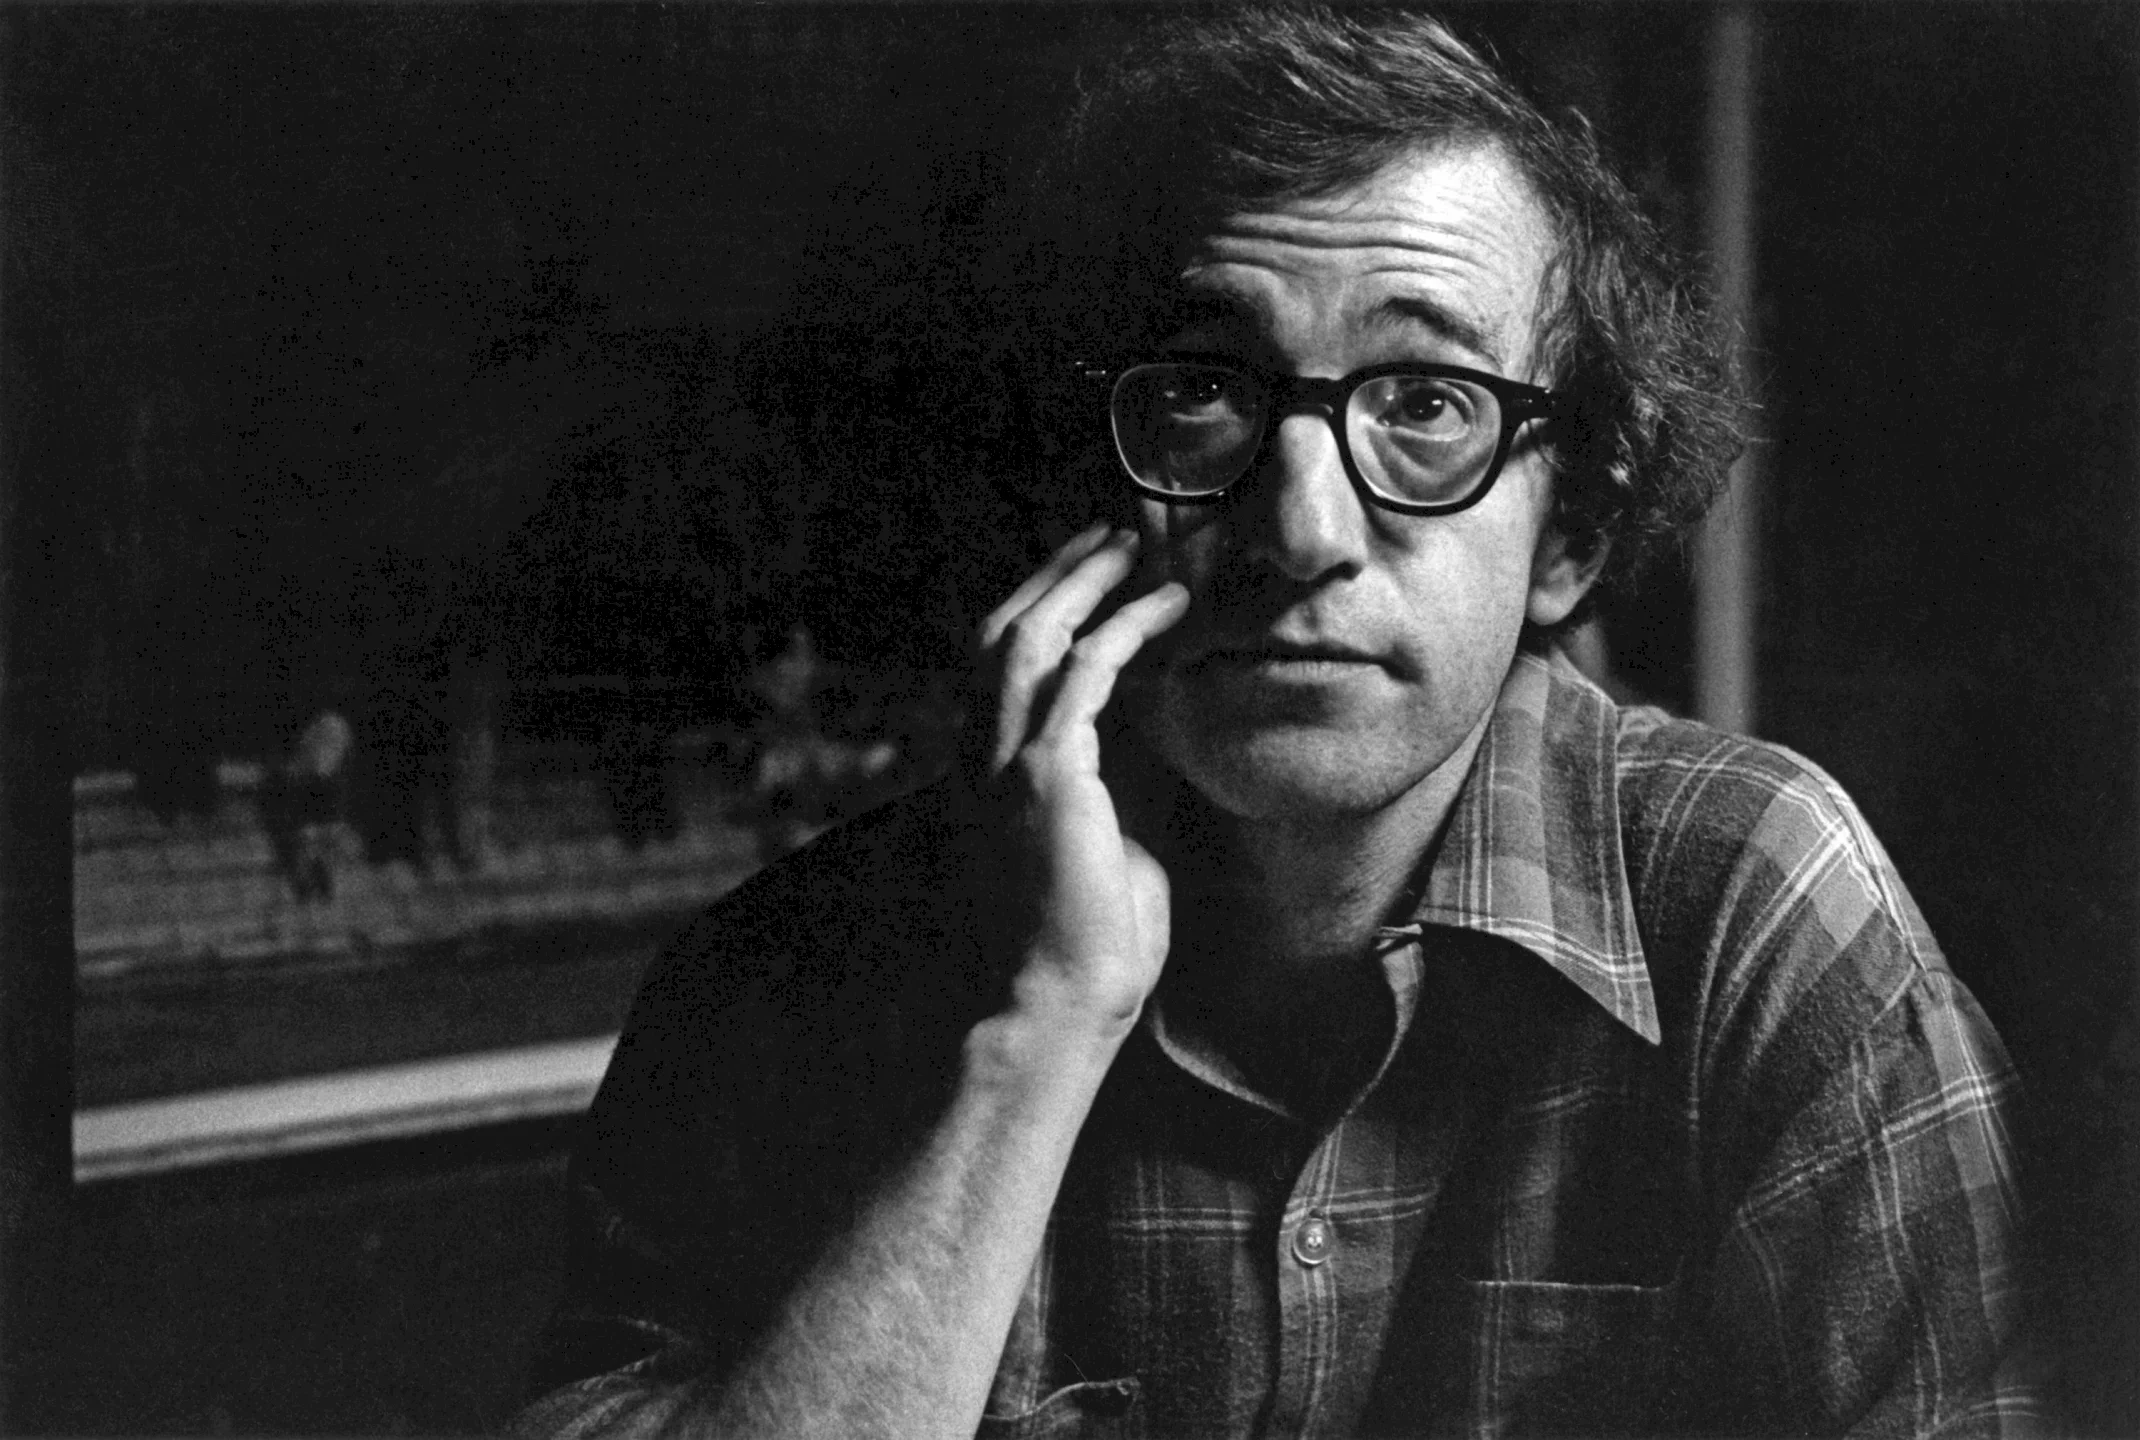 Photo du film : Woody Allen : a documentary